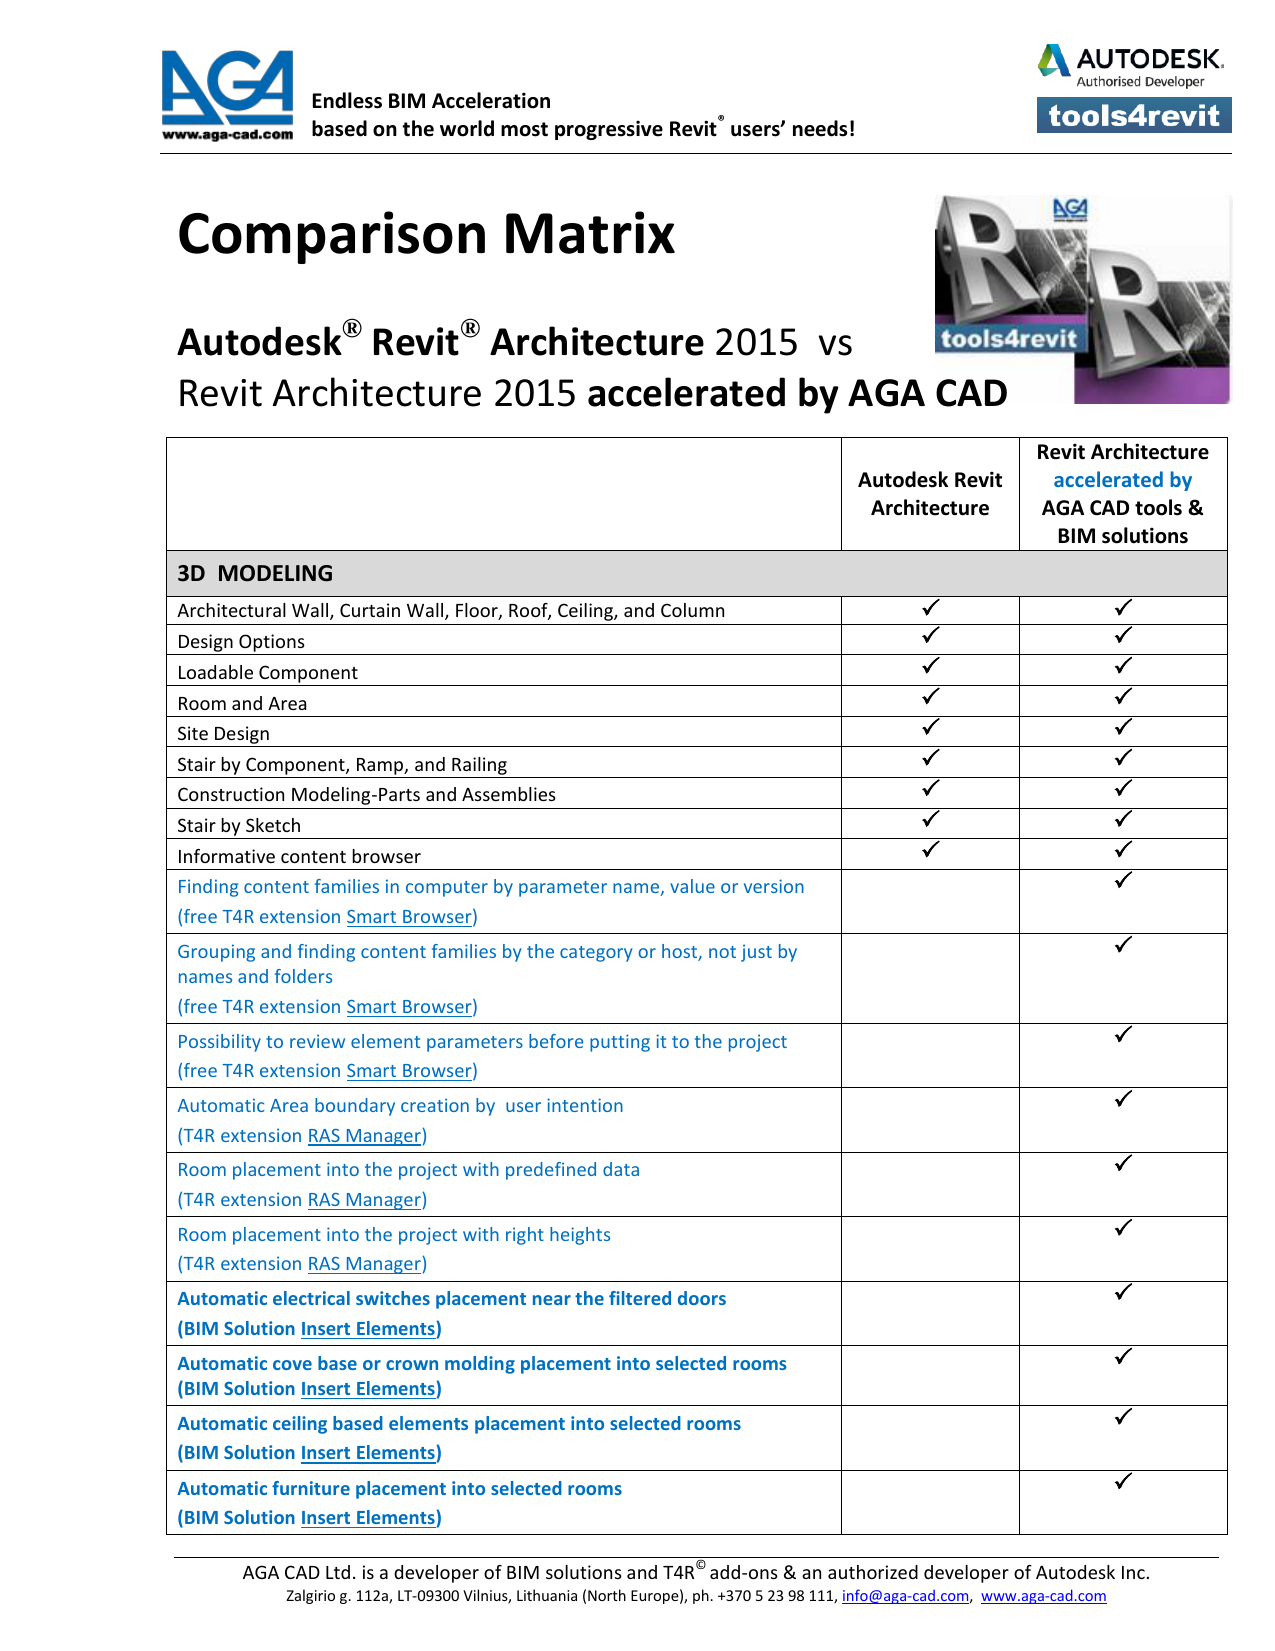 roof framing extensions for autodesk revit 2015